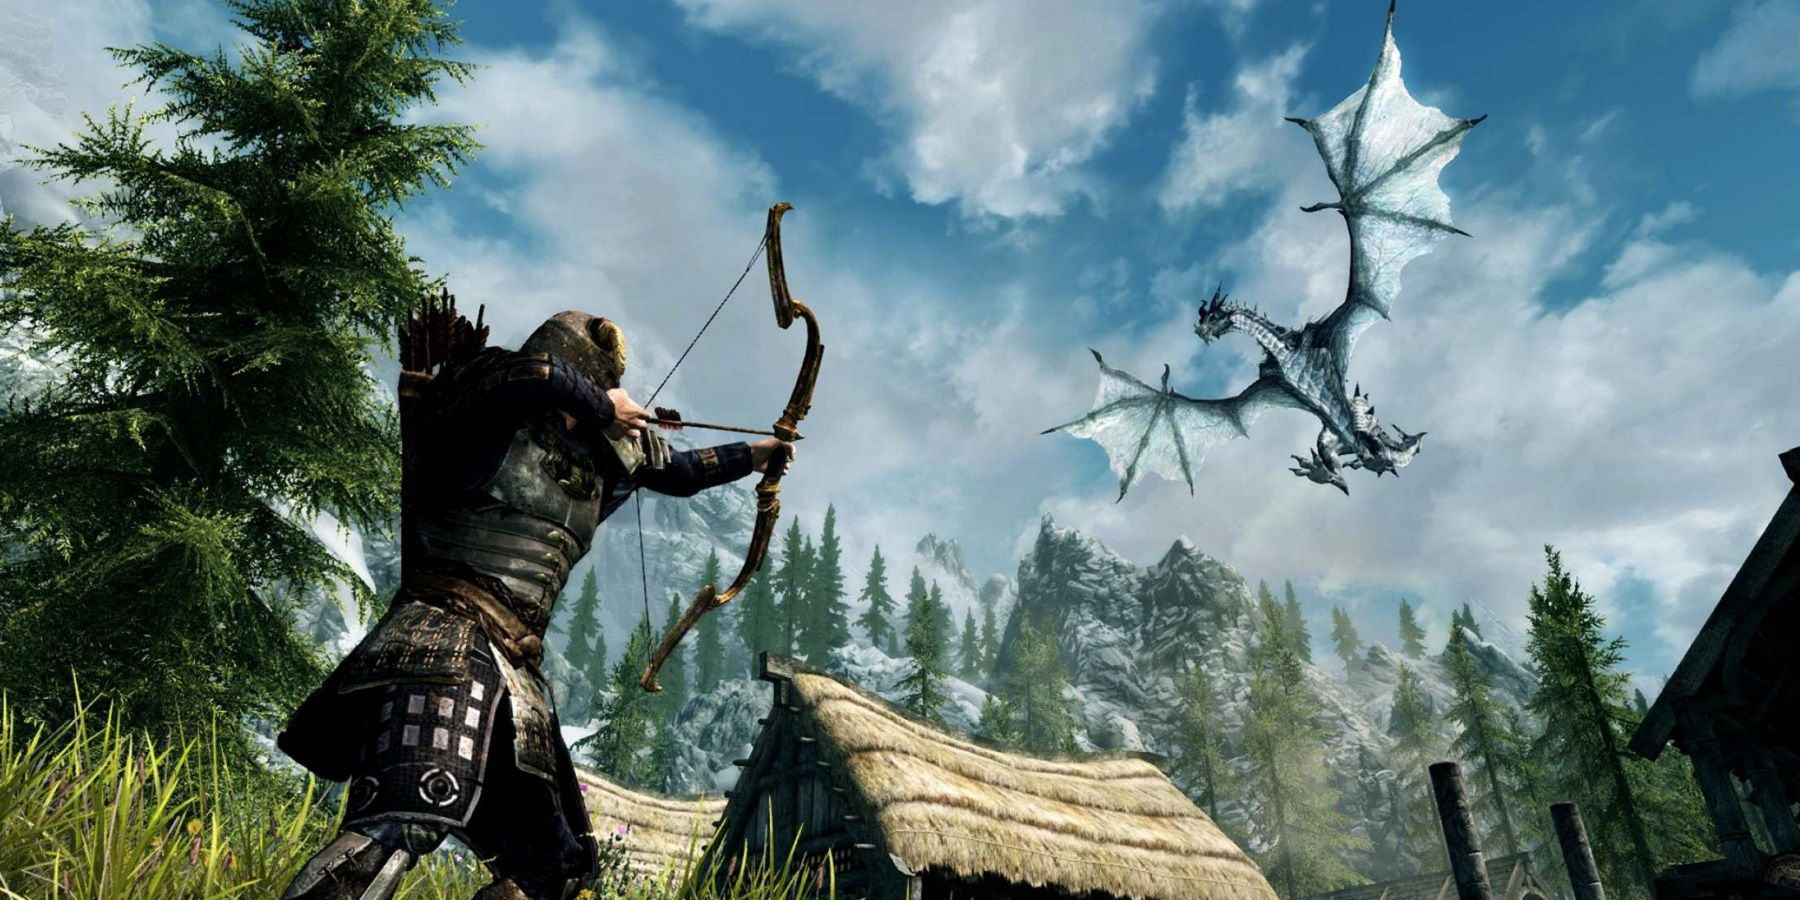 Screenshot from The Elder Scrolls 5: Skyrim showing an archer firing at a dragon that's flying overhead.